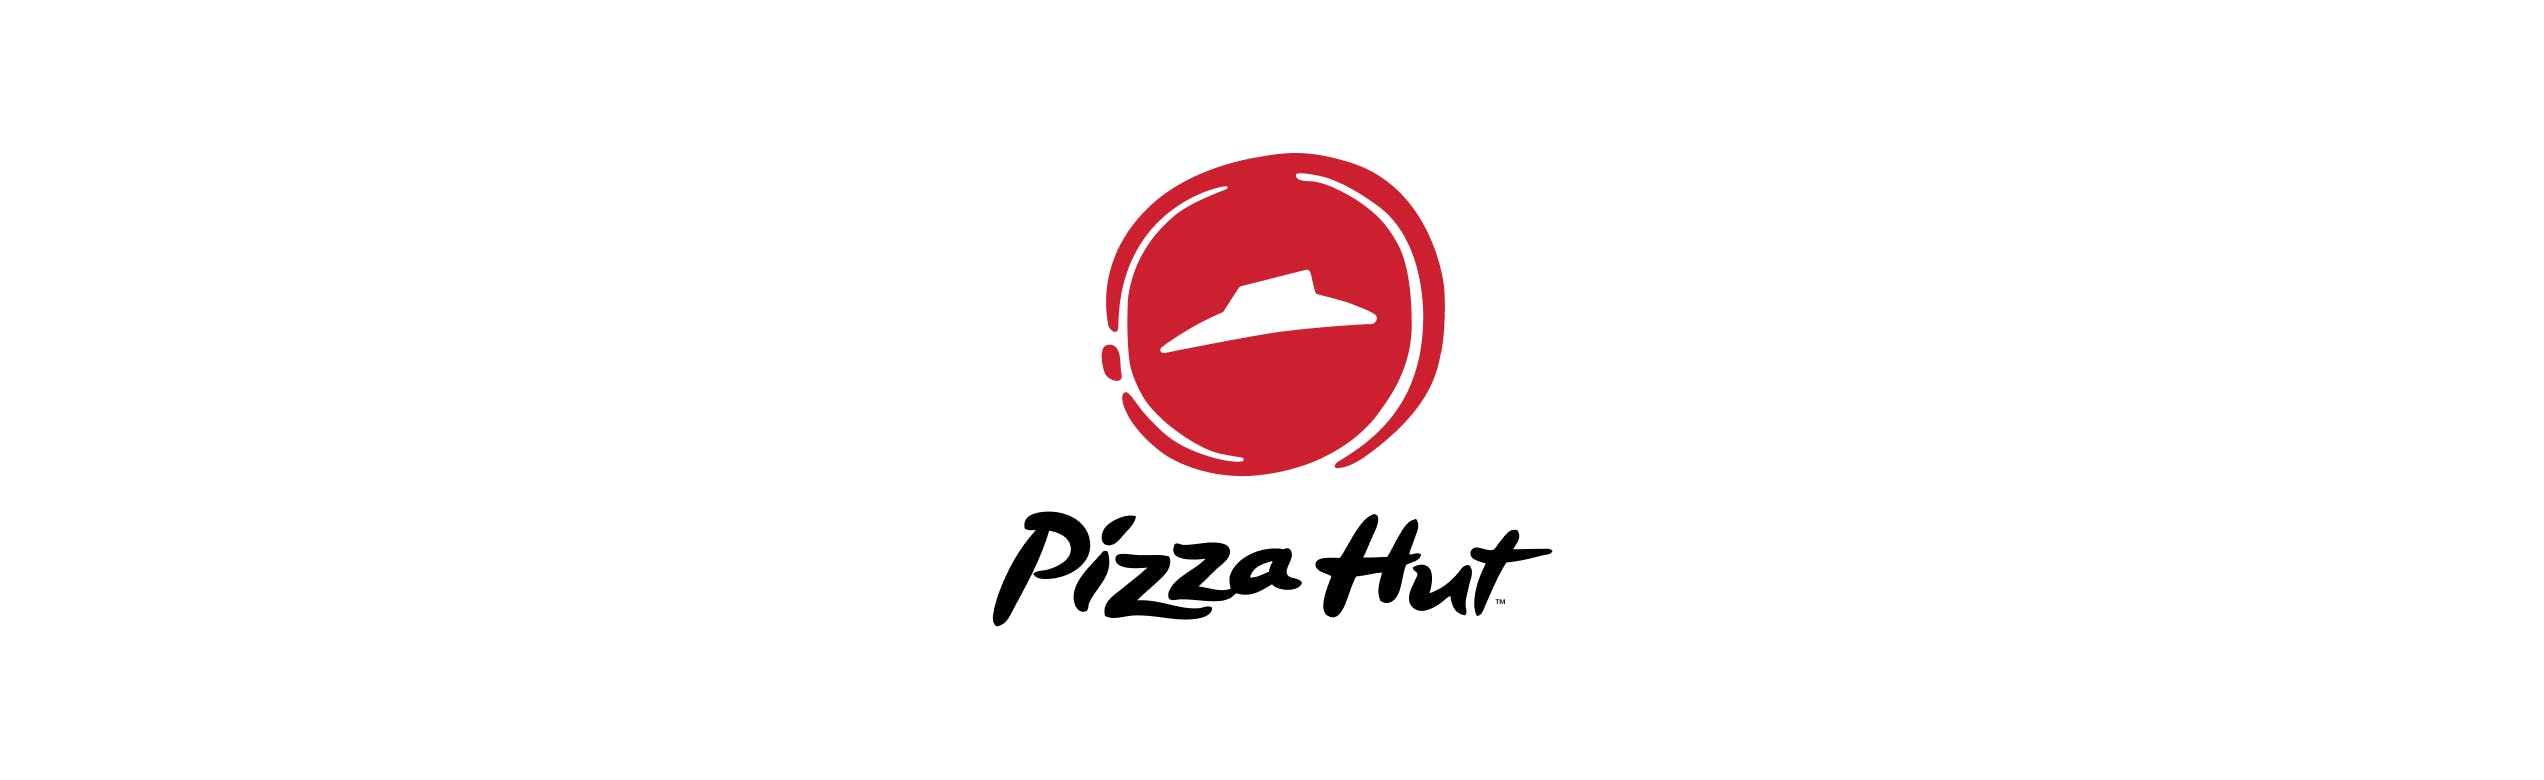 Pizza Hut Centered